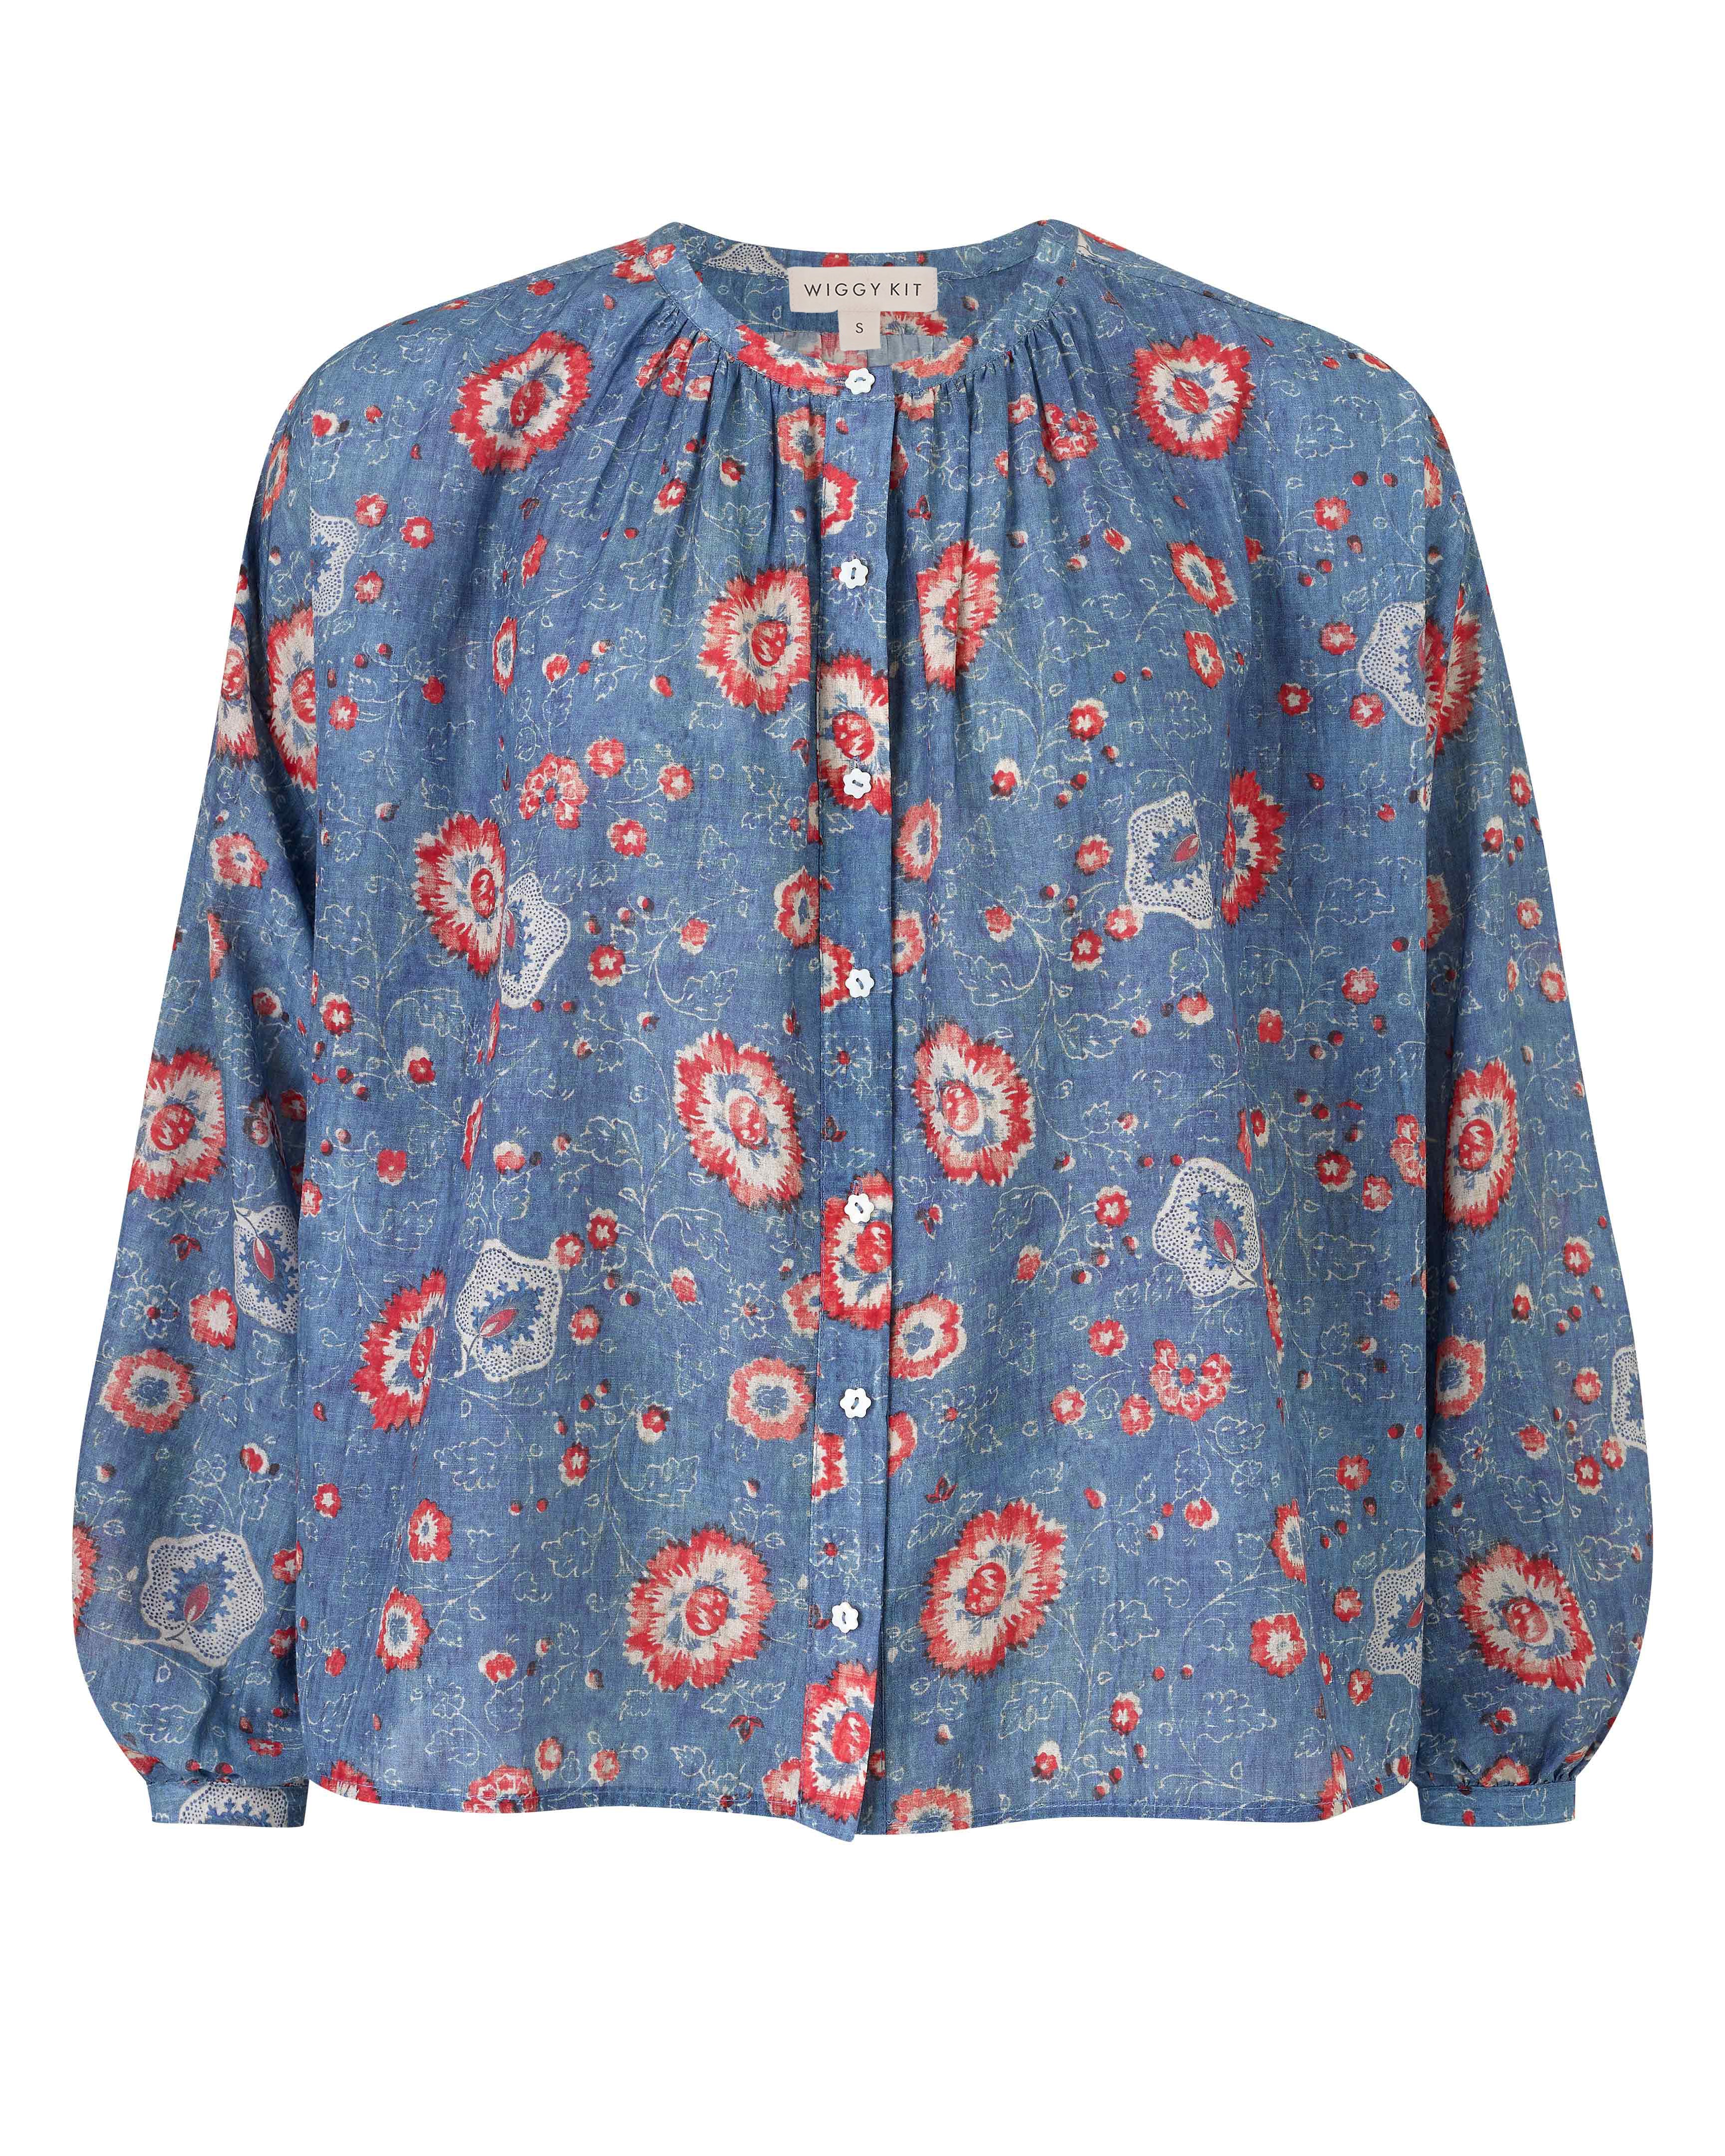 Wiggy Kit | Pampas Shirt in Blue Floral Print | Luxury Womenswear ...